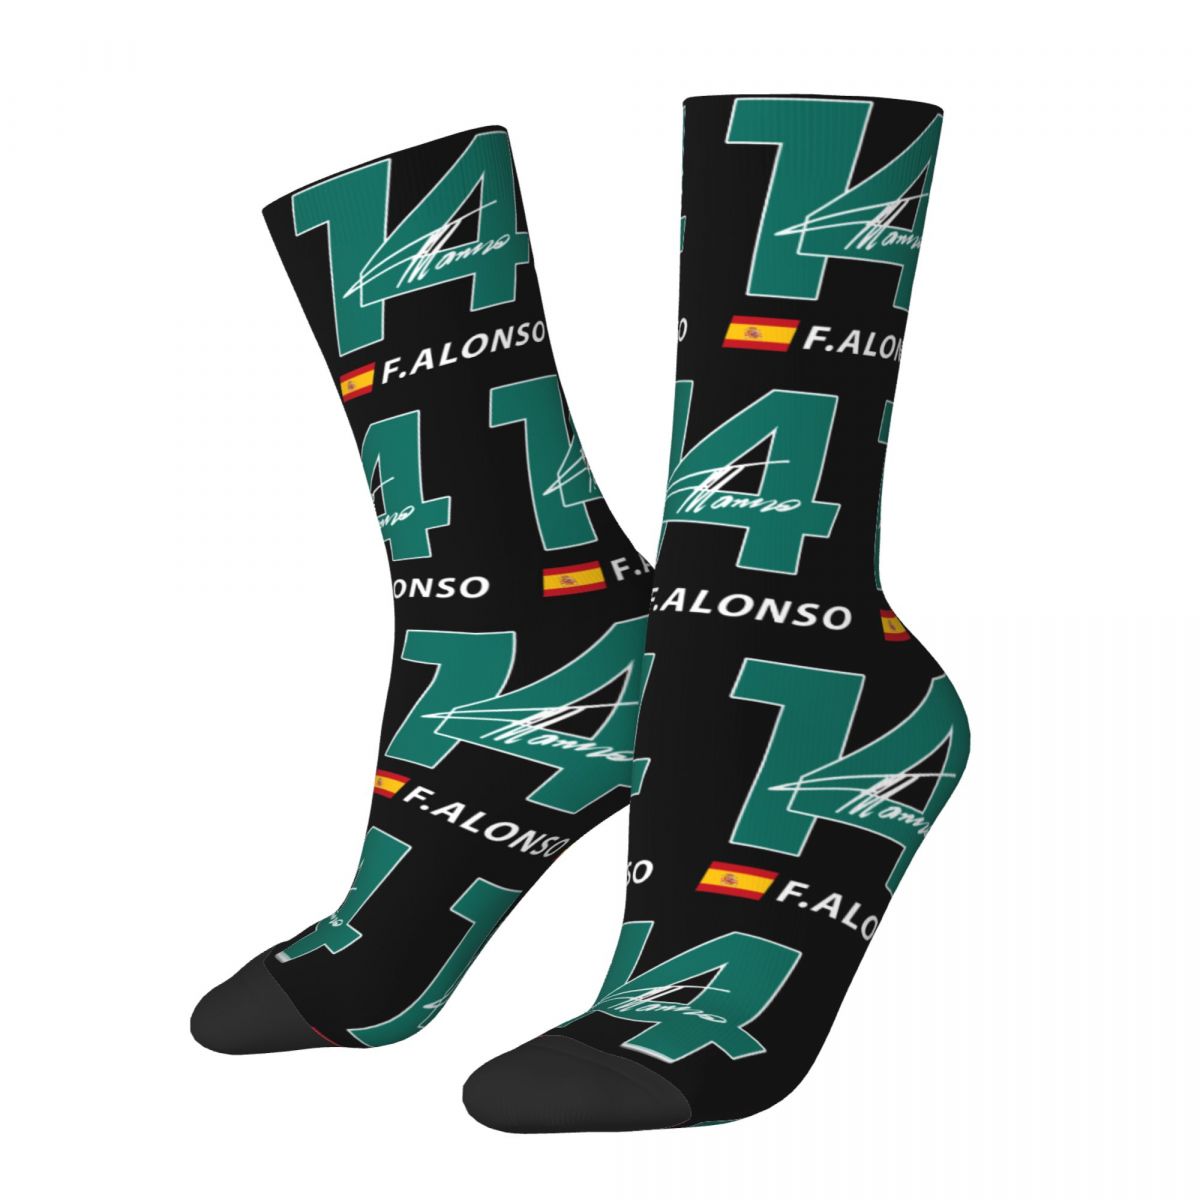 F1 Team Aston Martin Team Driver Alonso 14 Socks Great Gift Fan Merchandise